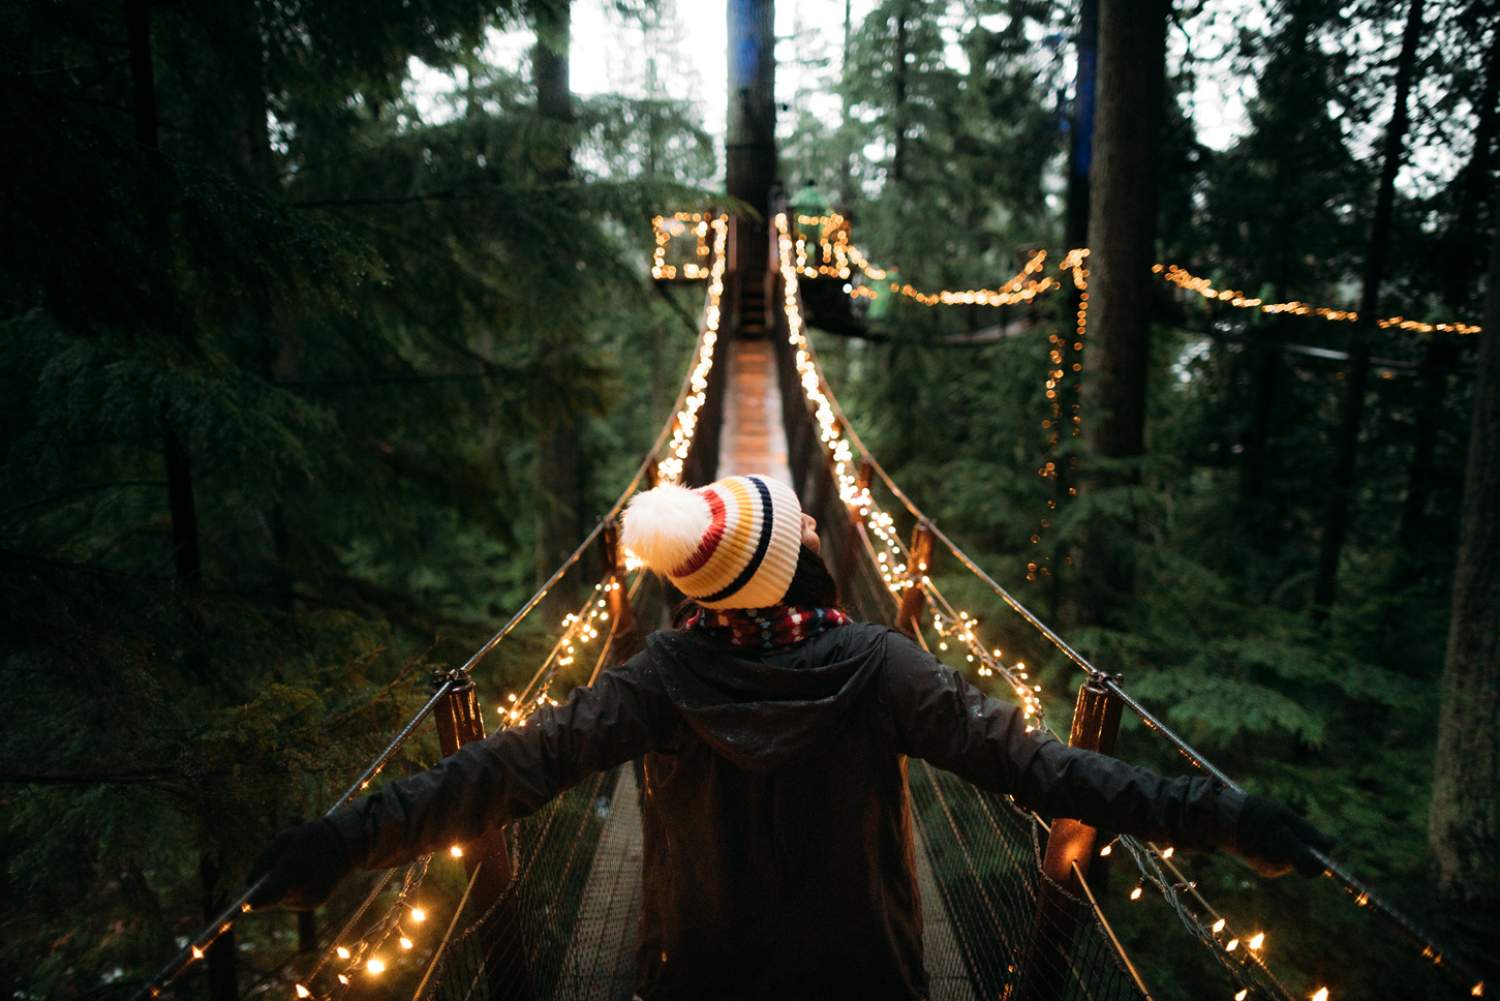 Capilano suspension bridge park, Vancouver